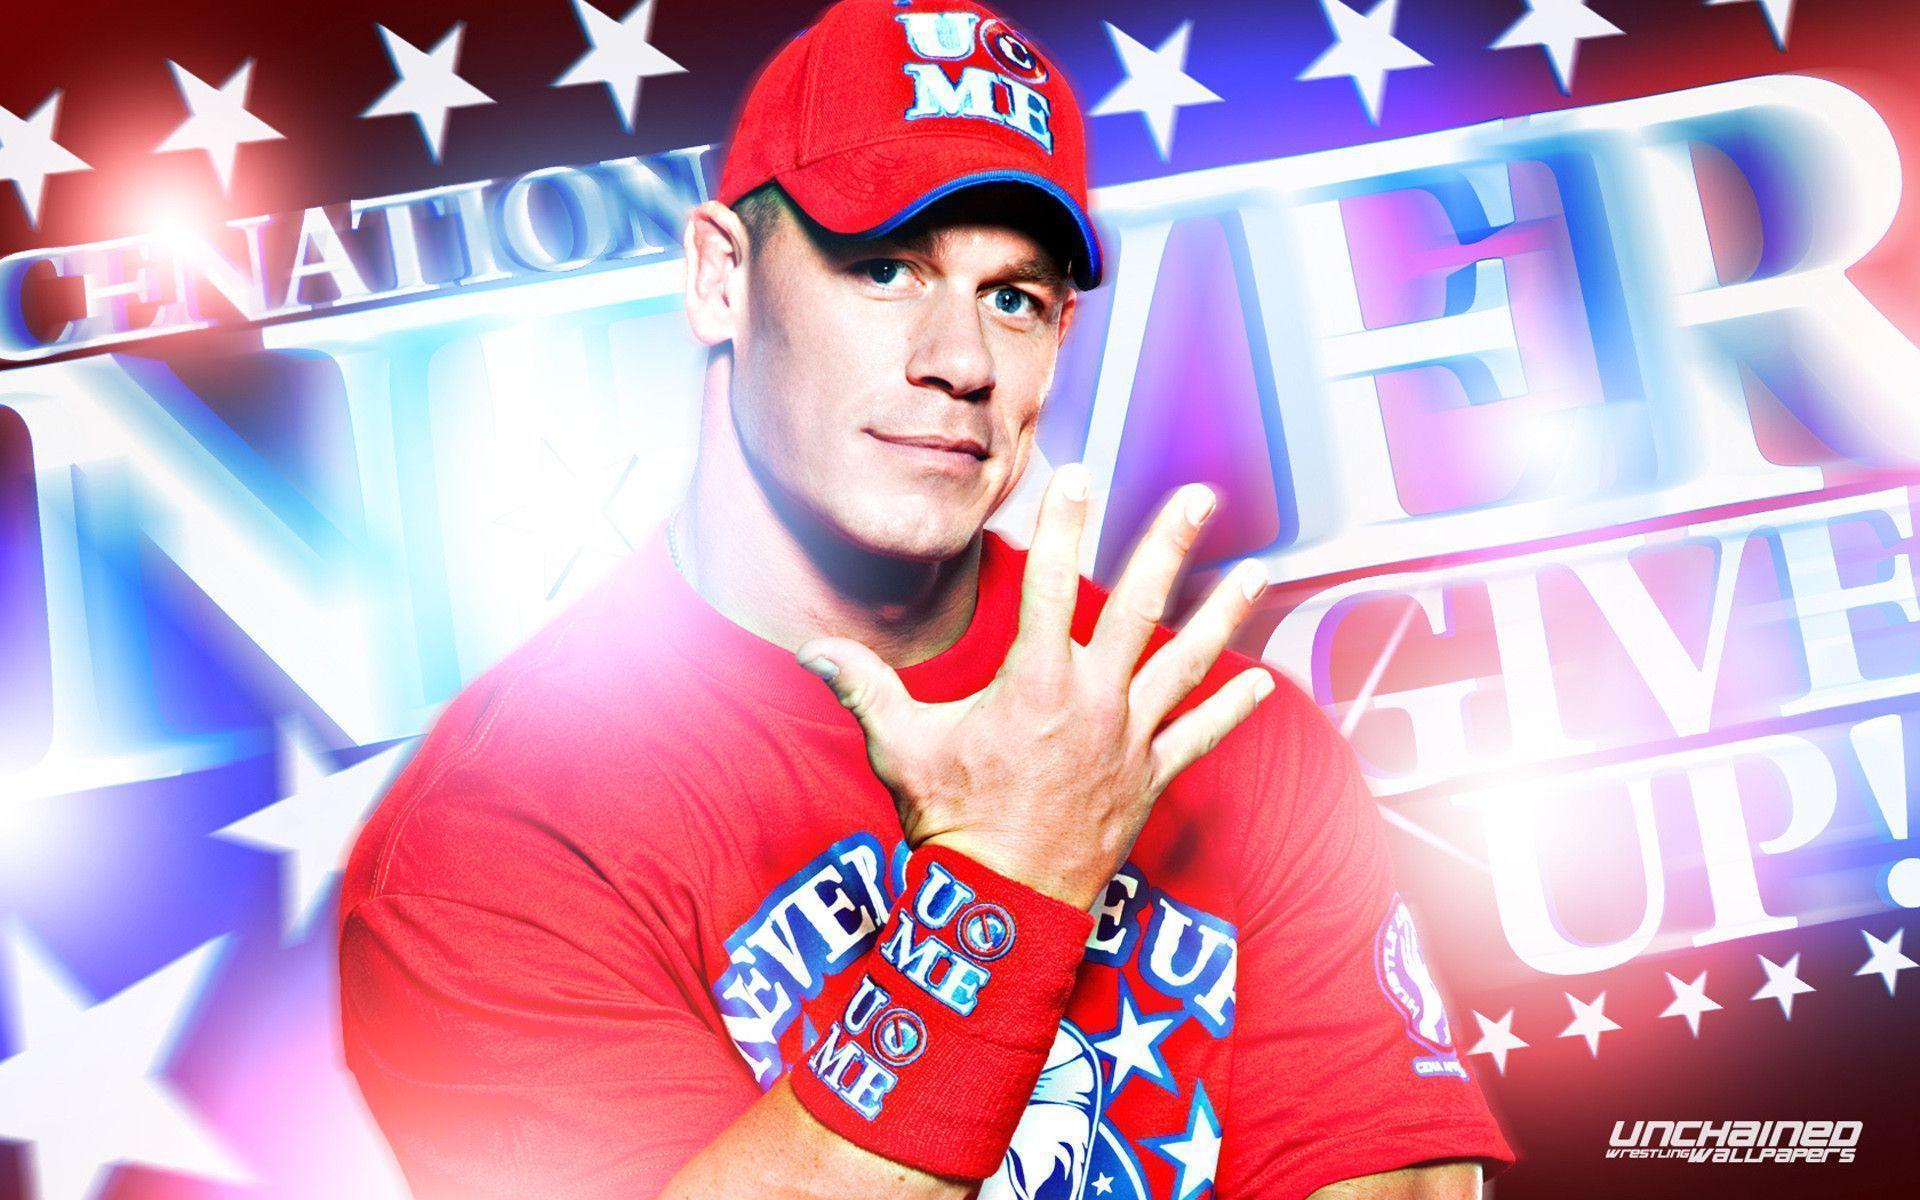 WWE John Cena "Never Give Up" Wallpaper 3 Unchained WWE.com